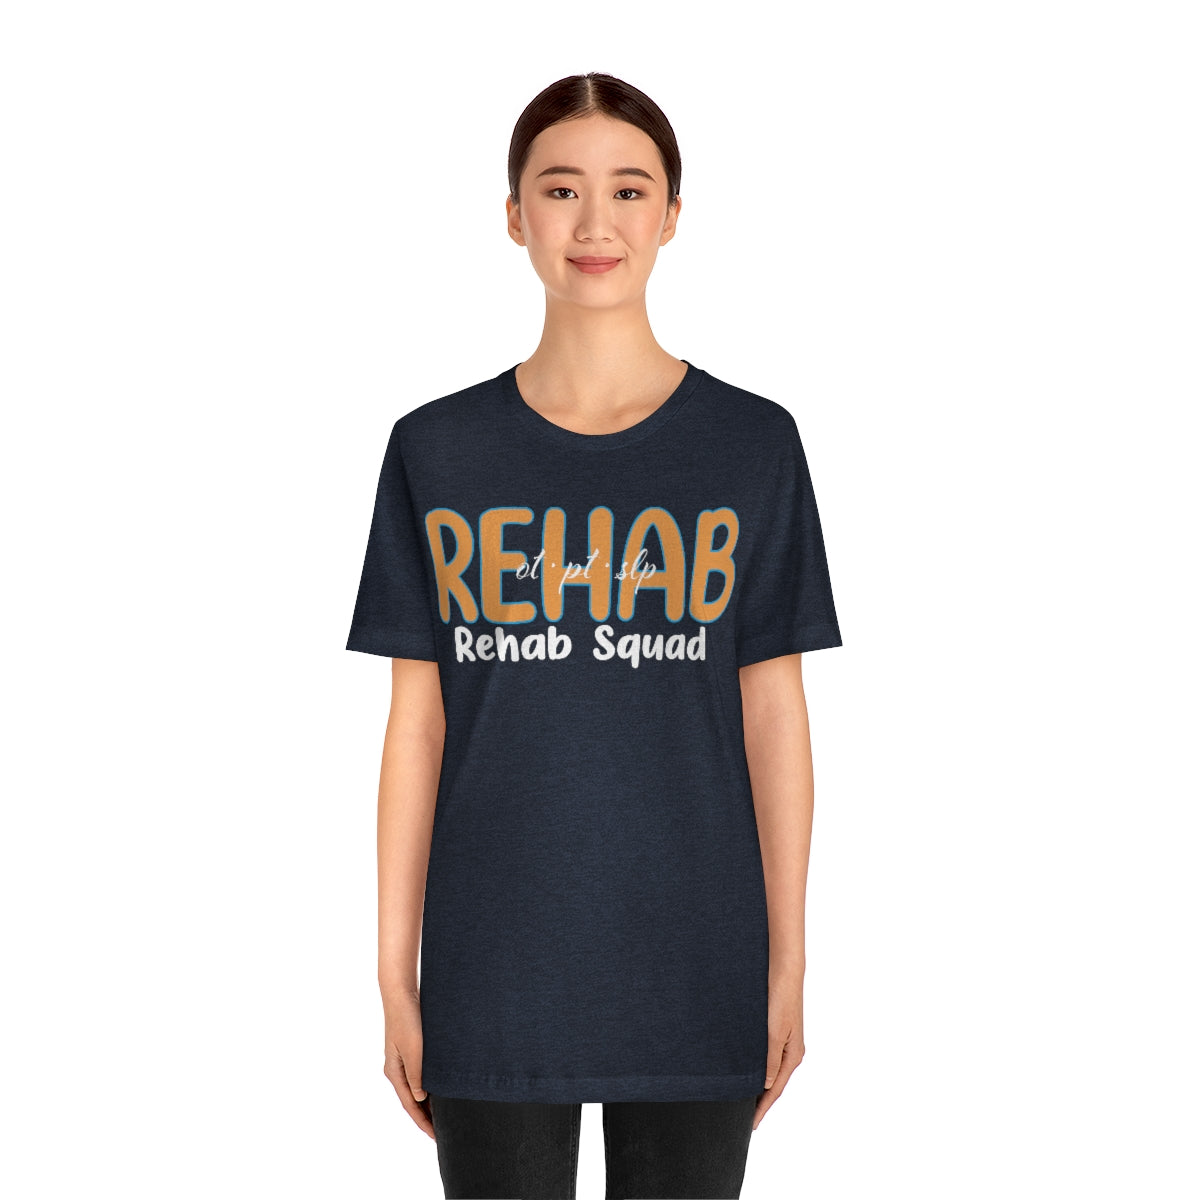 OT PT SLP Shirt REHAB SQUAD Therapy Graphic Tee